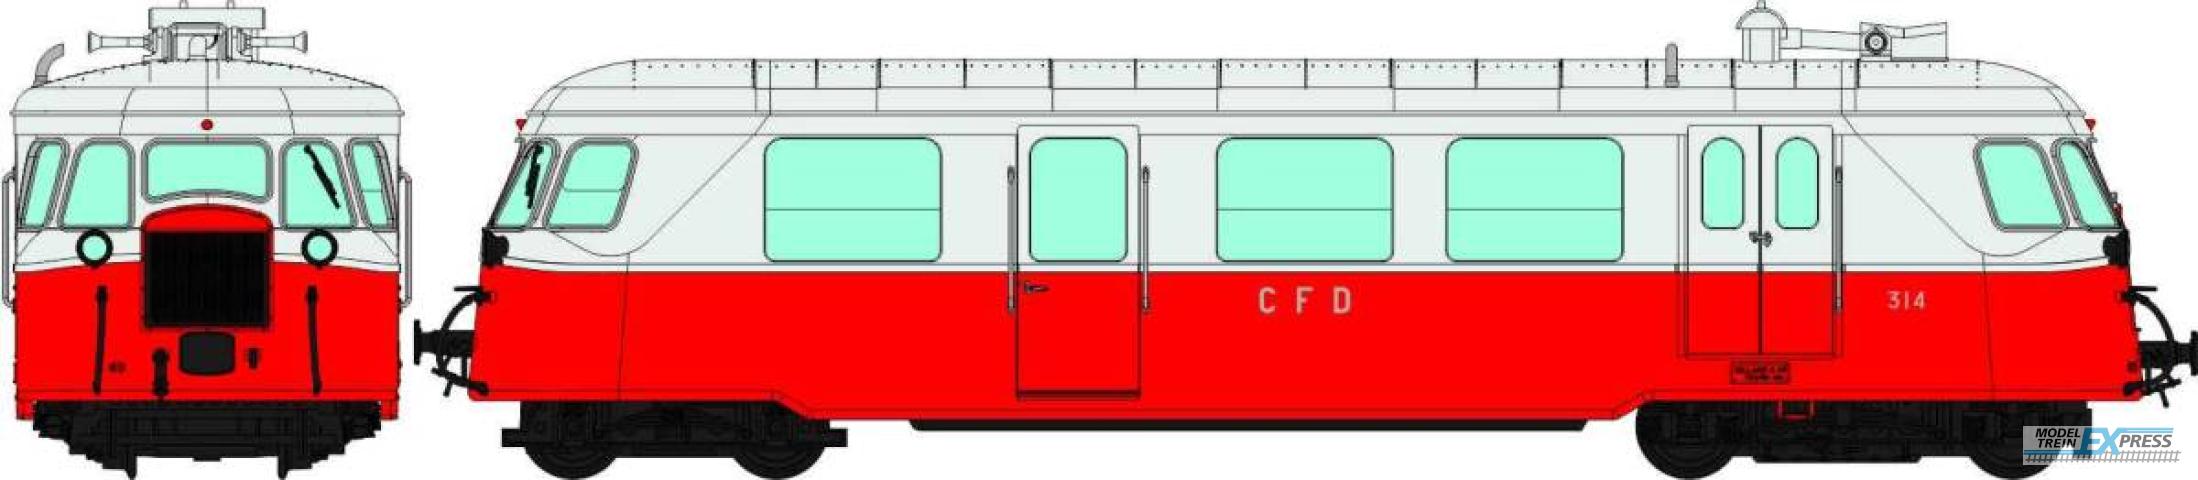 REE models VM-002 BILLARD Railcar CFD N°314, 2 Lights, Red/Cream Era III - ANALOG